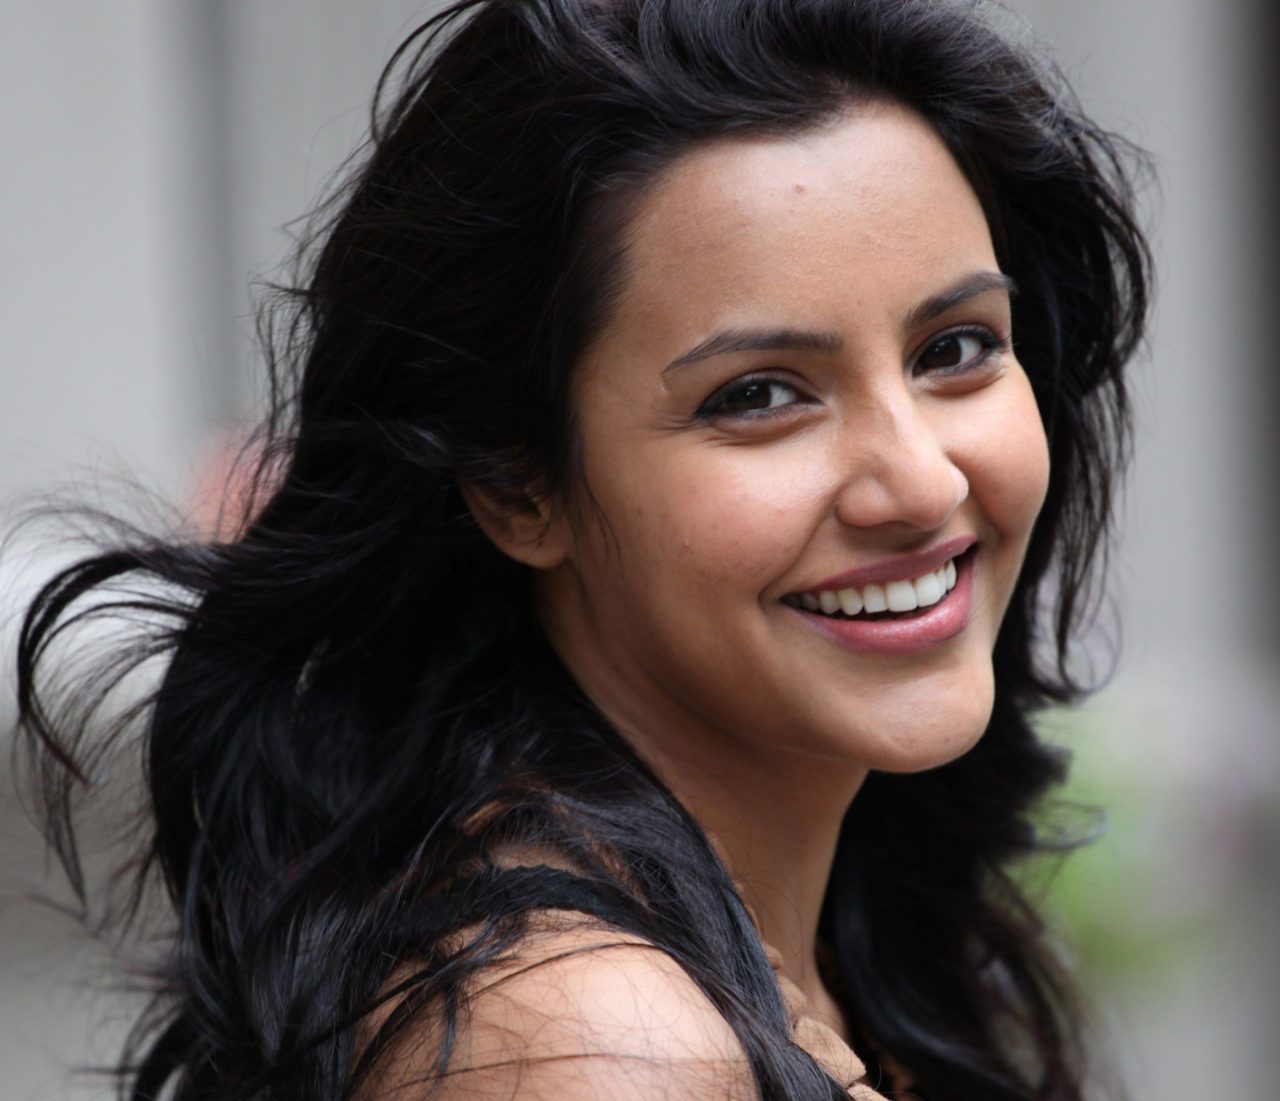 Cute Smiling Pics Of Priya Anand